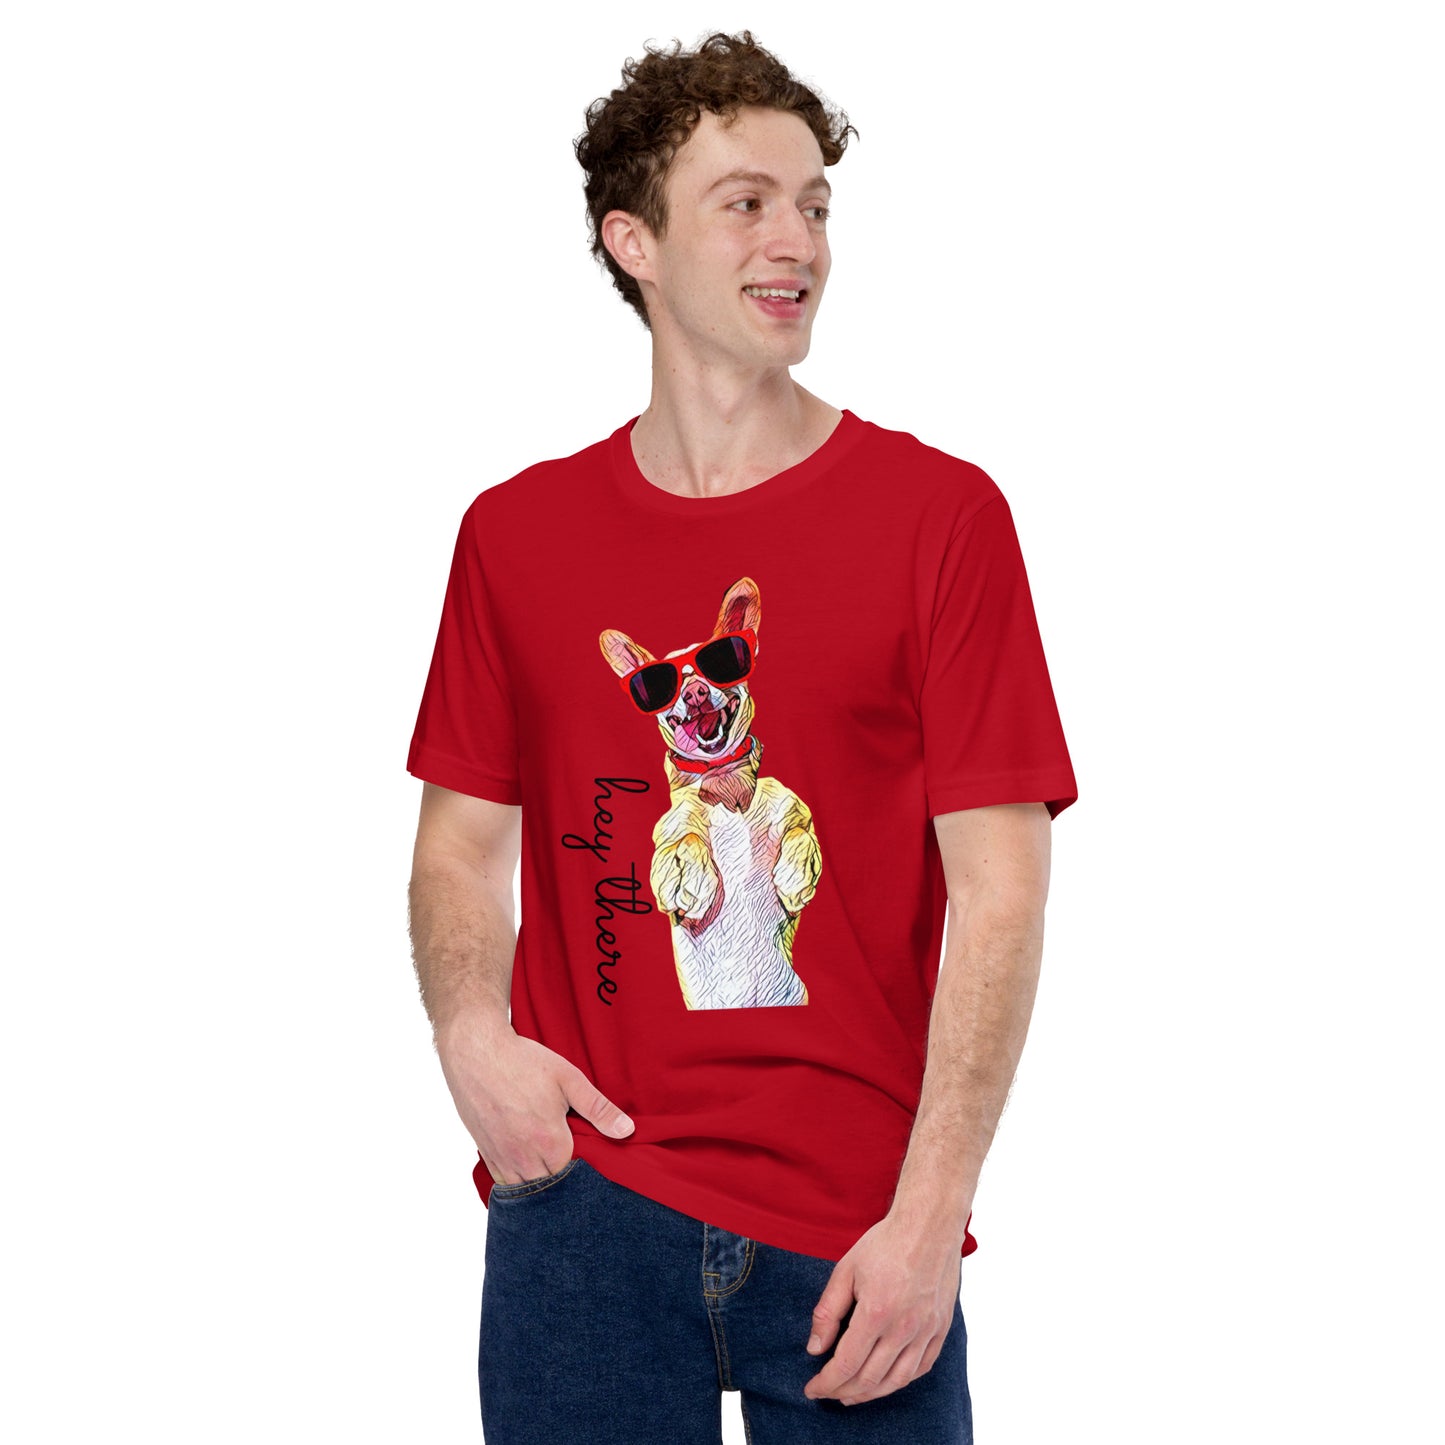 Kool Dog Unisex T-Shirt